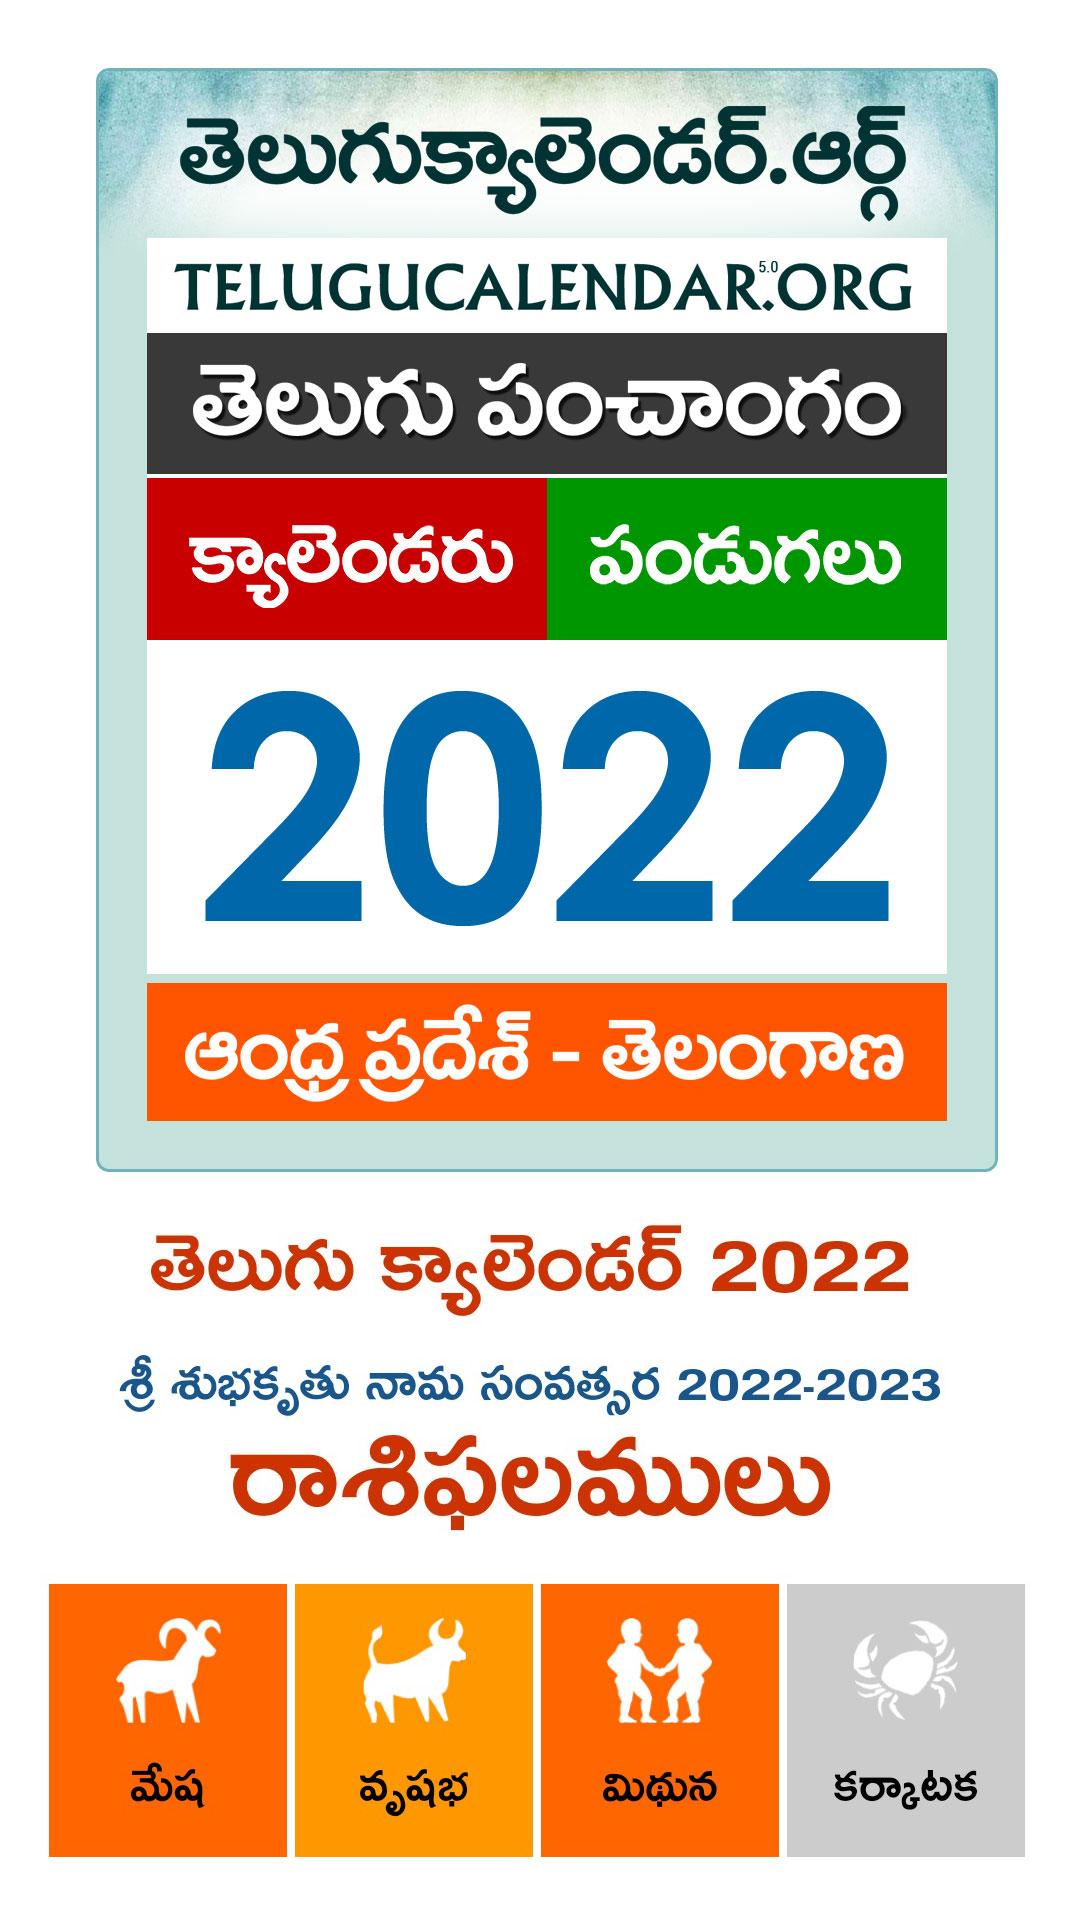 Nj Telugu Calendar 2022 Telugu Calendar 2022 Festivals For Android - Apk Download